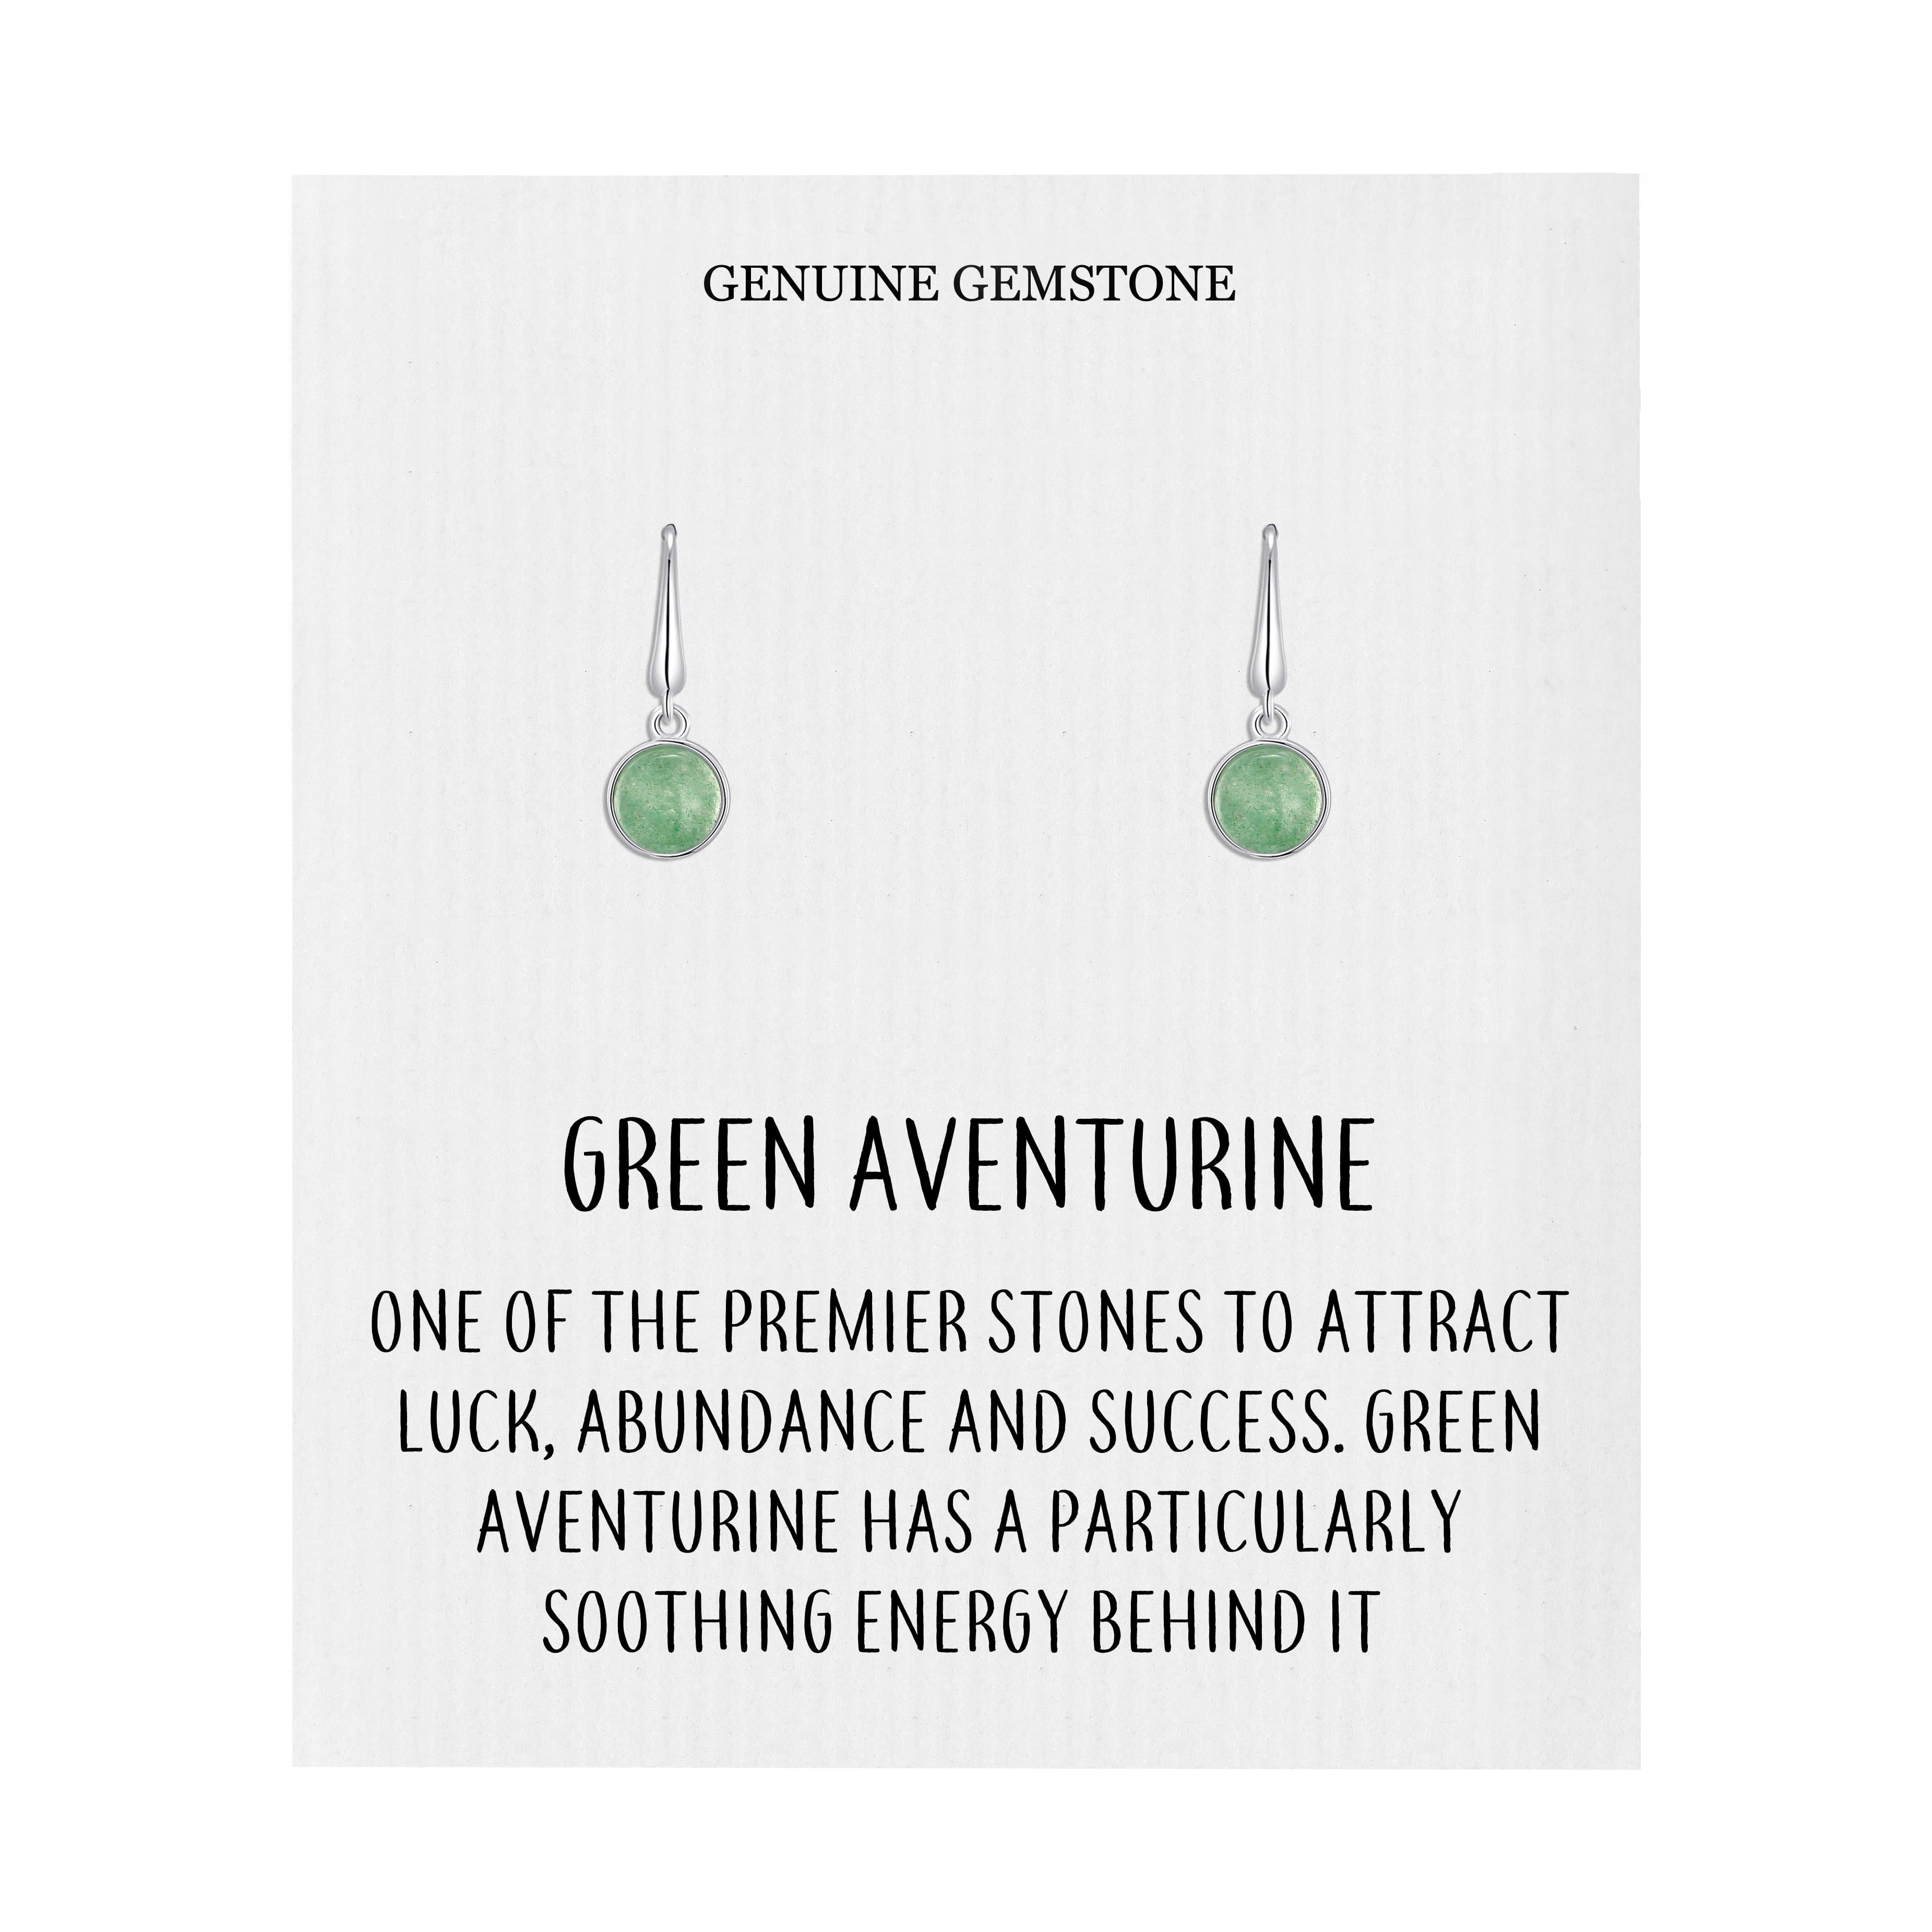 Green Aventurine Drop Earrings with Quote Card by Philip Jones Jewellery